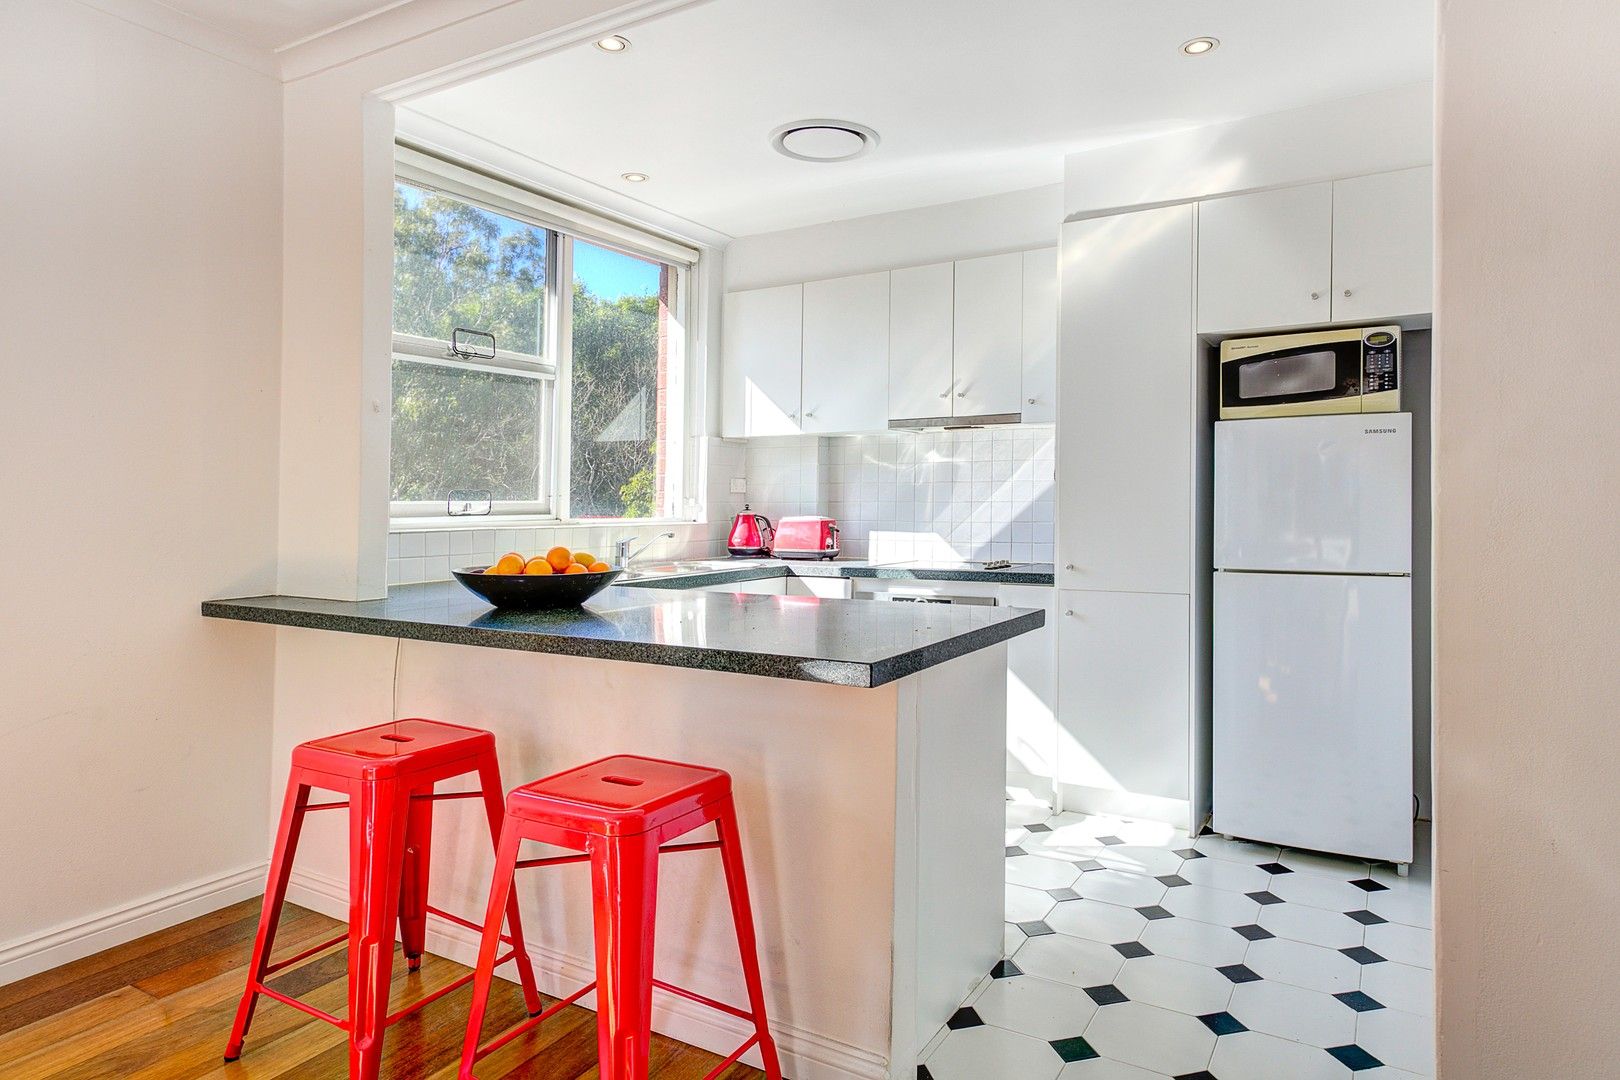 2 bedrooms Apartment / Unit / Flat in 3/21 Park Avenue MOSMAN NSW, 2088